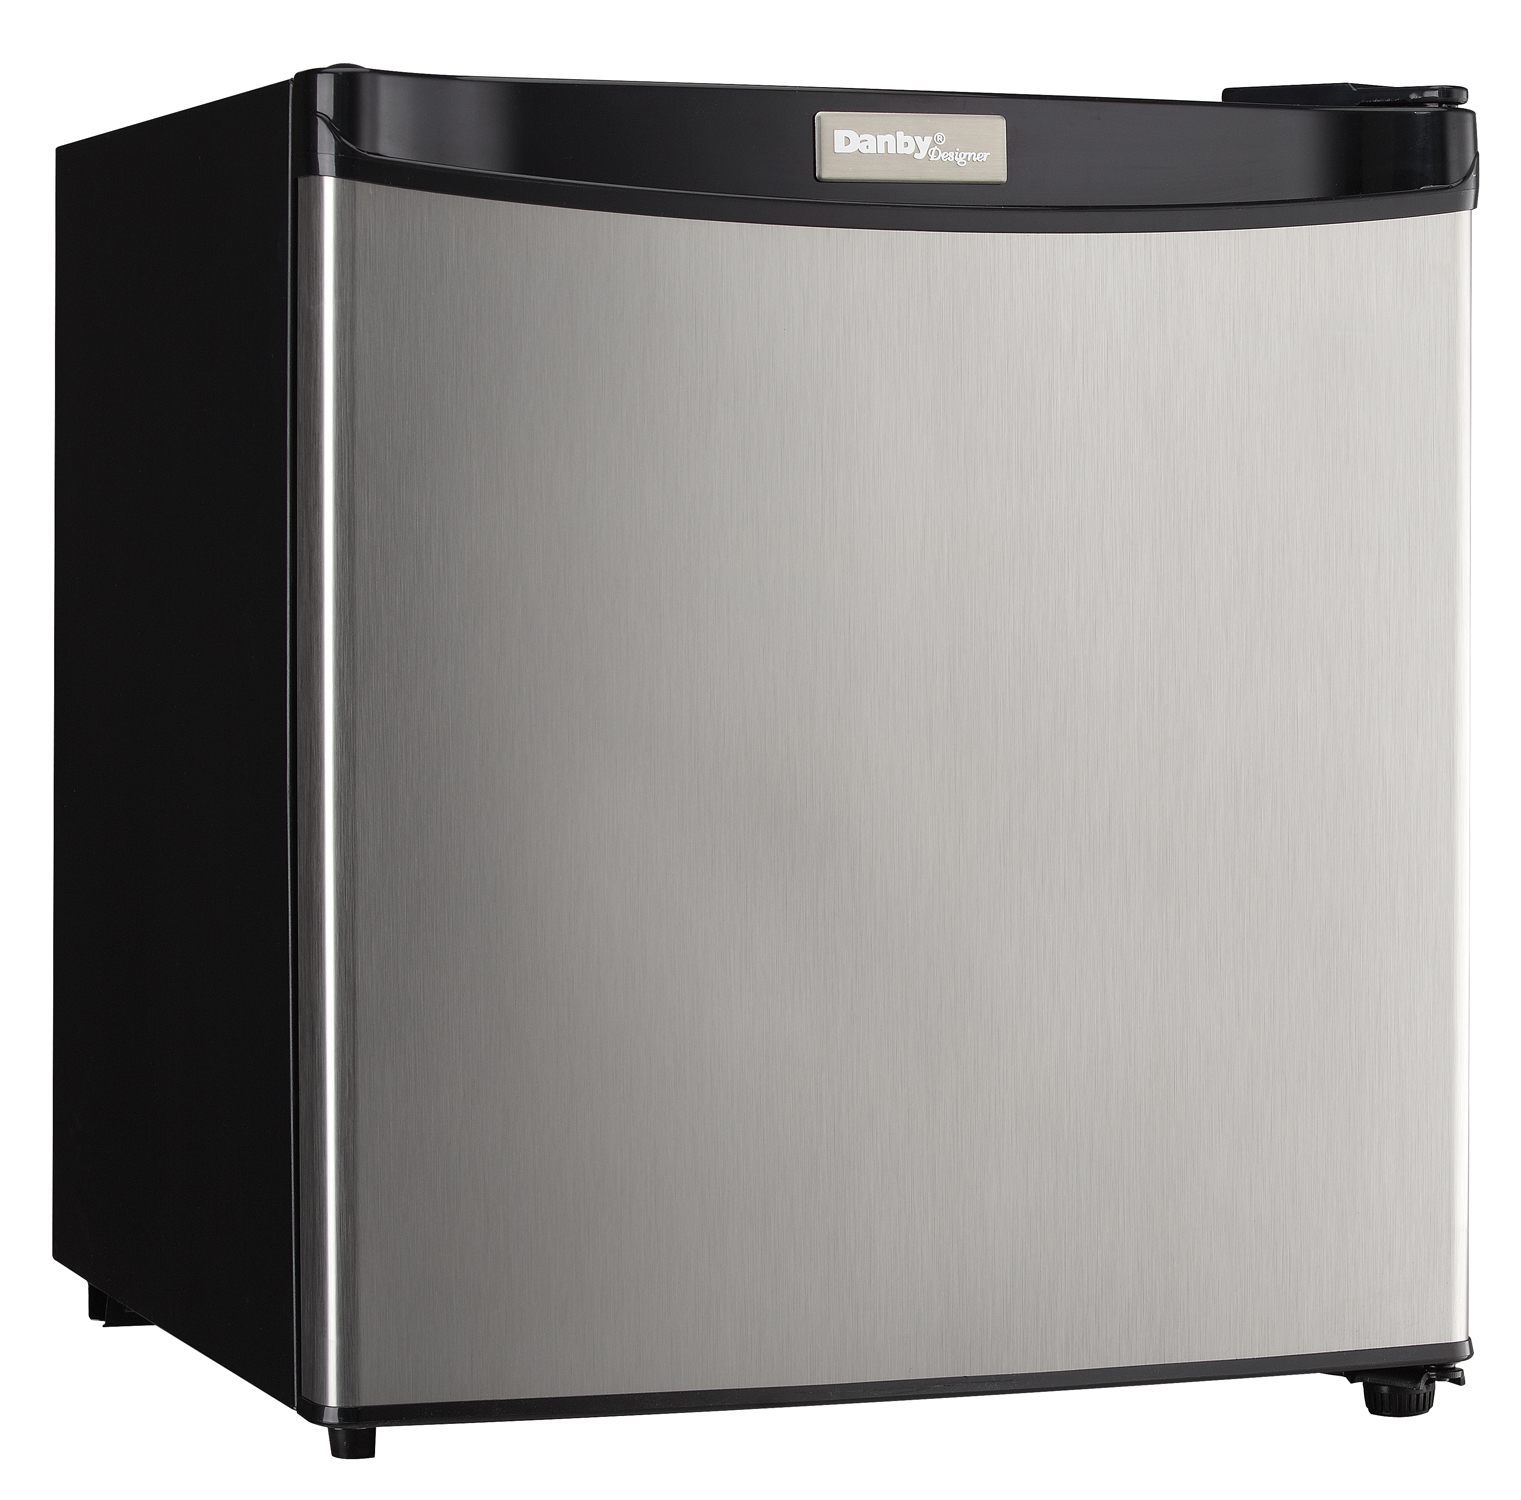 Danby 12.3 cu. ft. Apartment Size Refrigerator (DFF123C1WDB